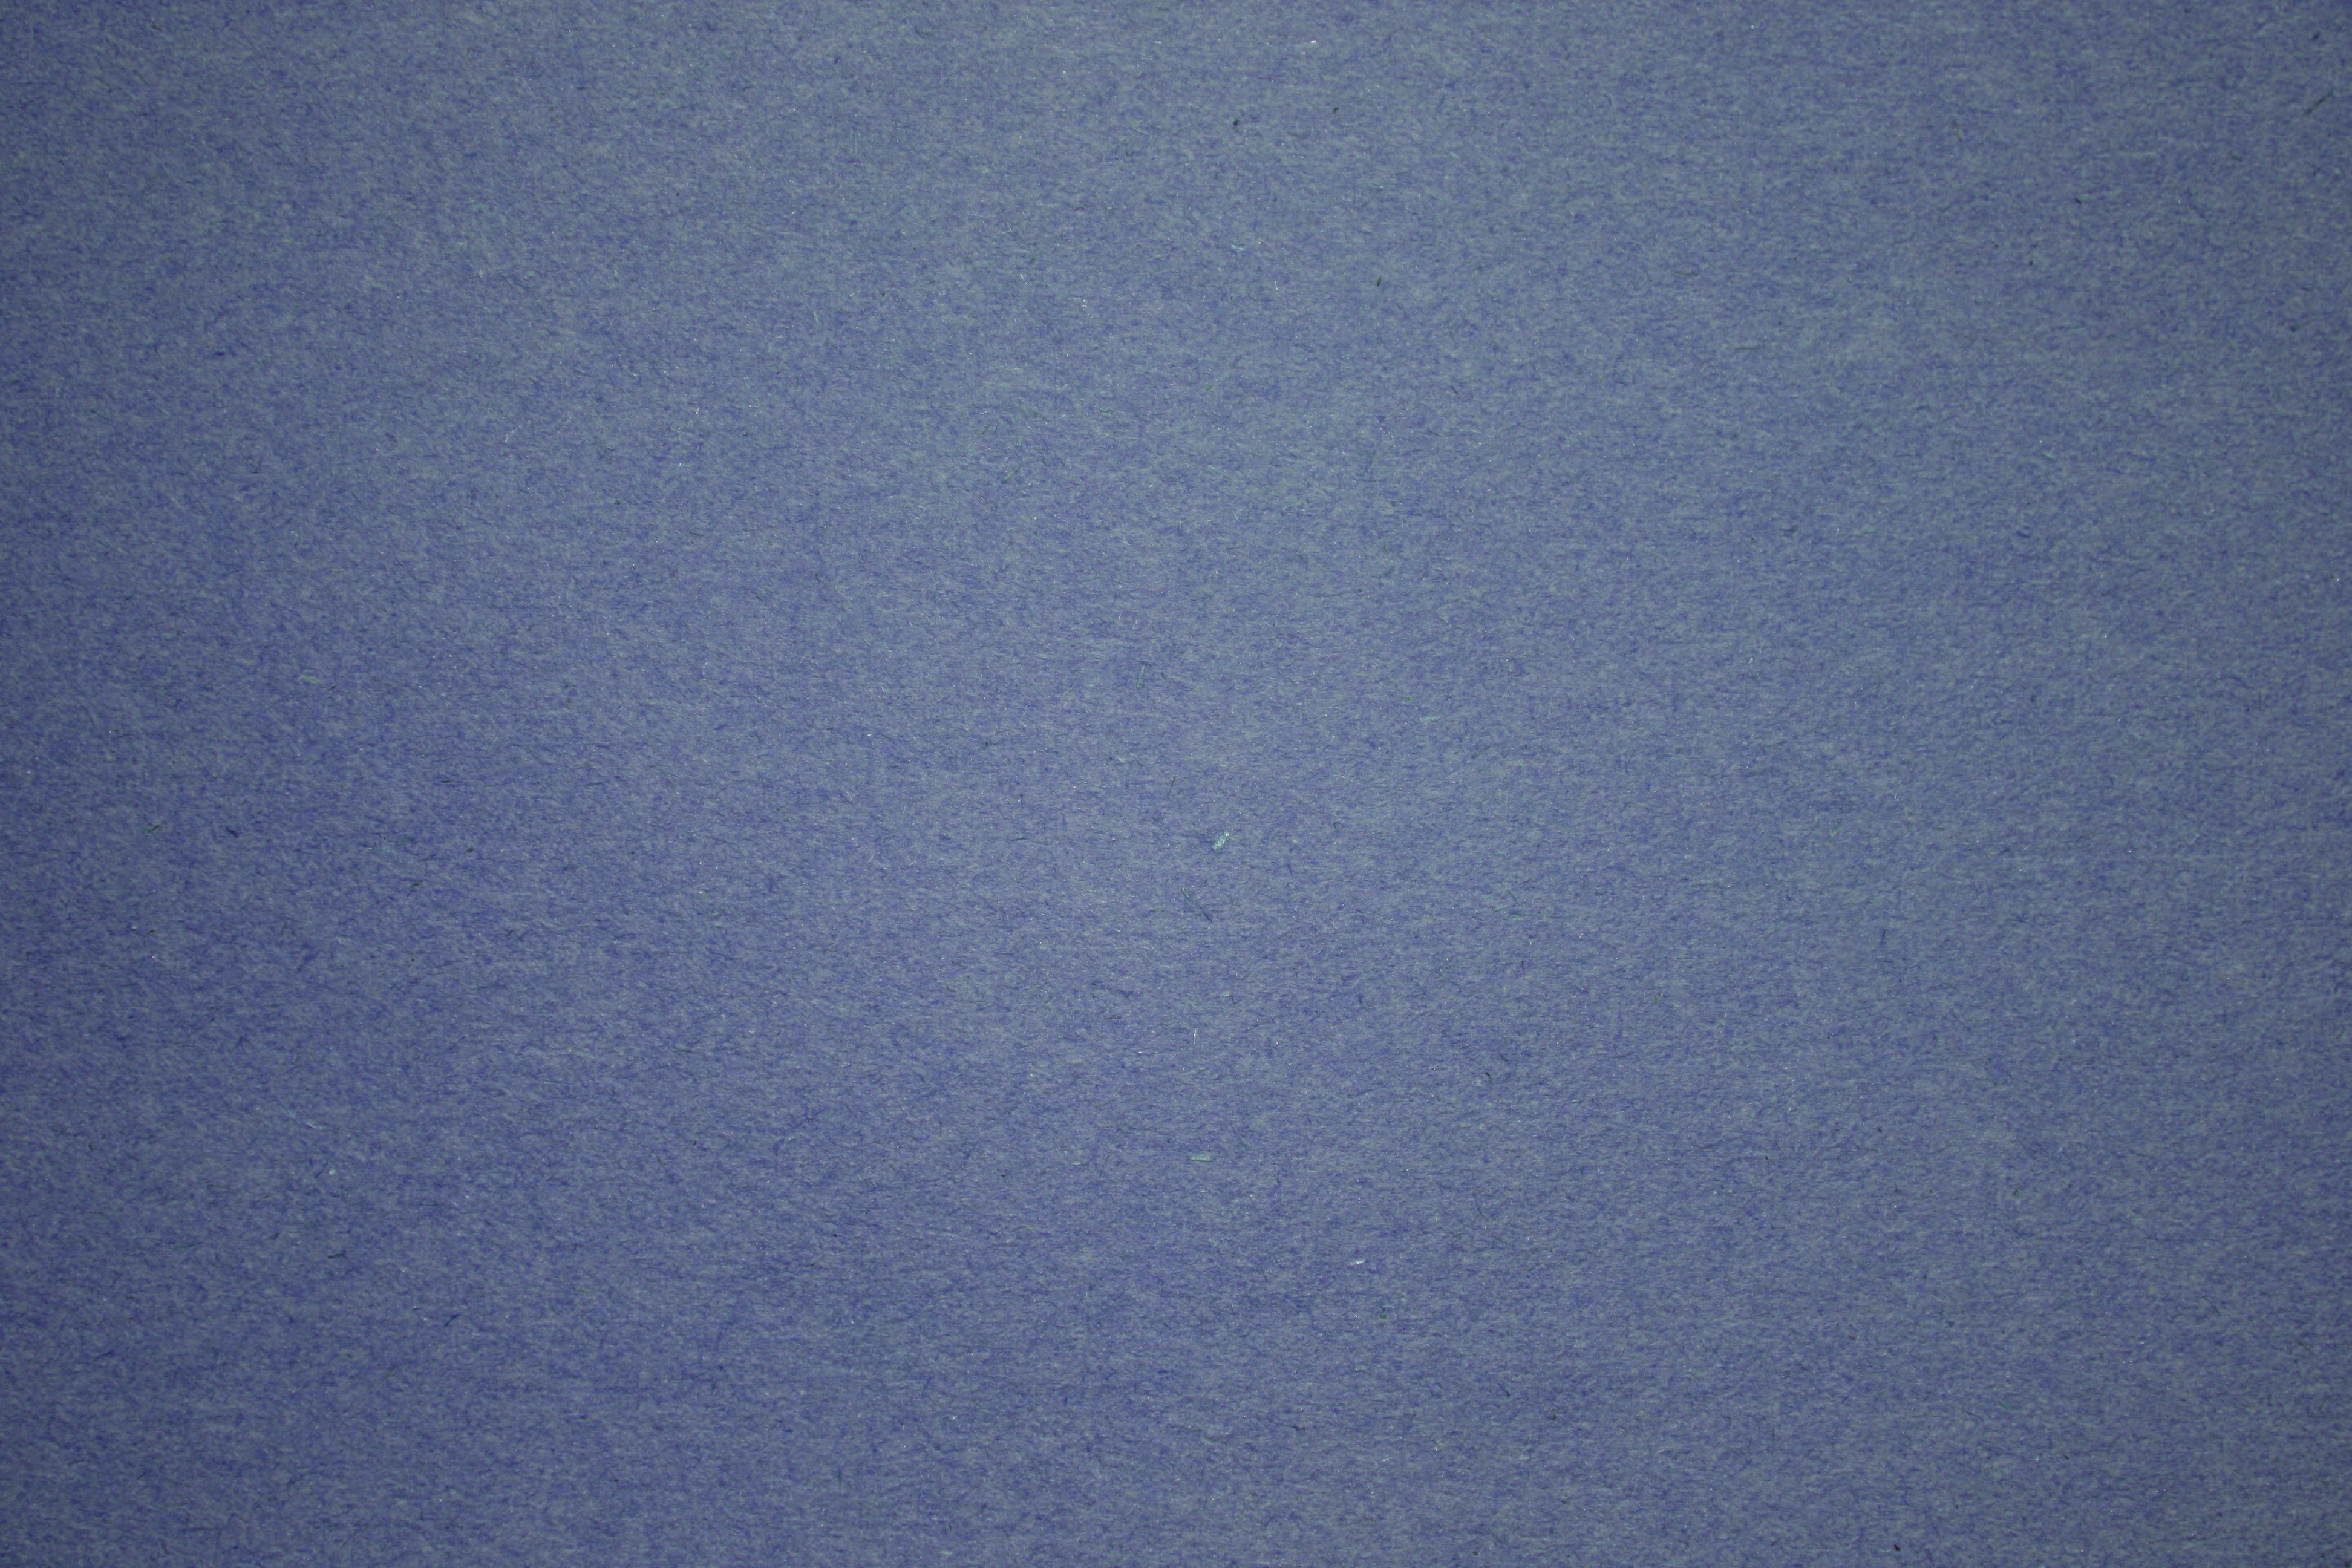 Blue Construction Paper Texture Picture, Free Photograph